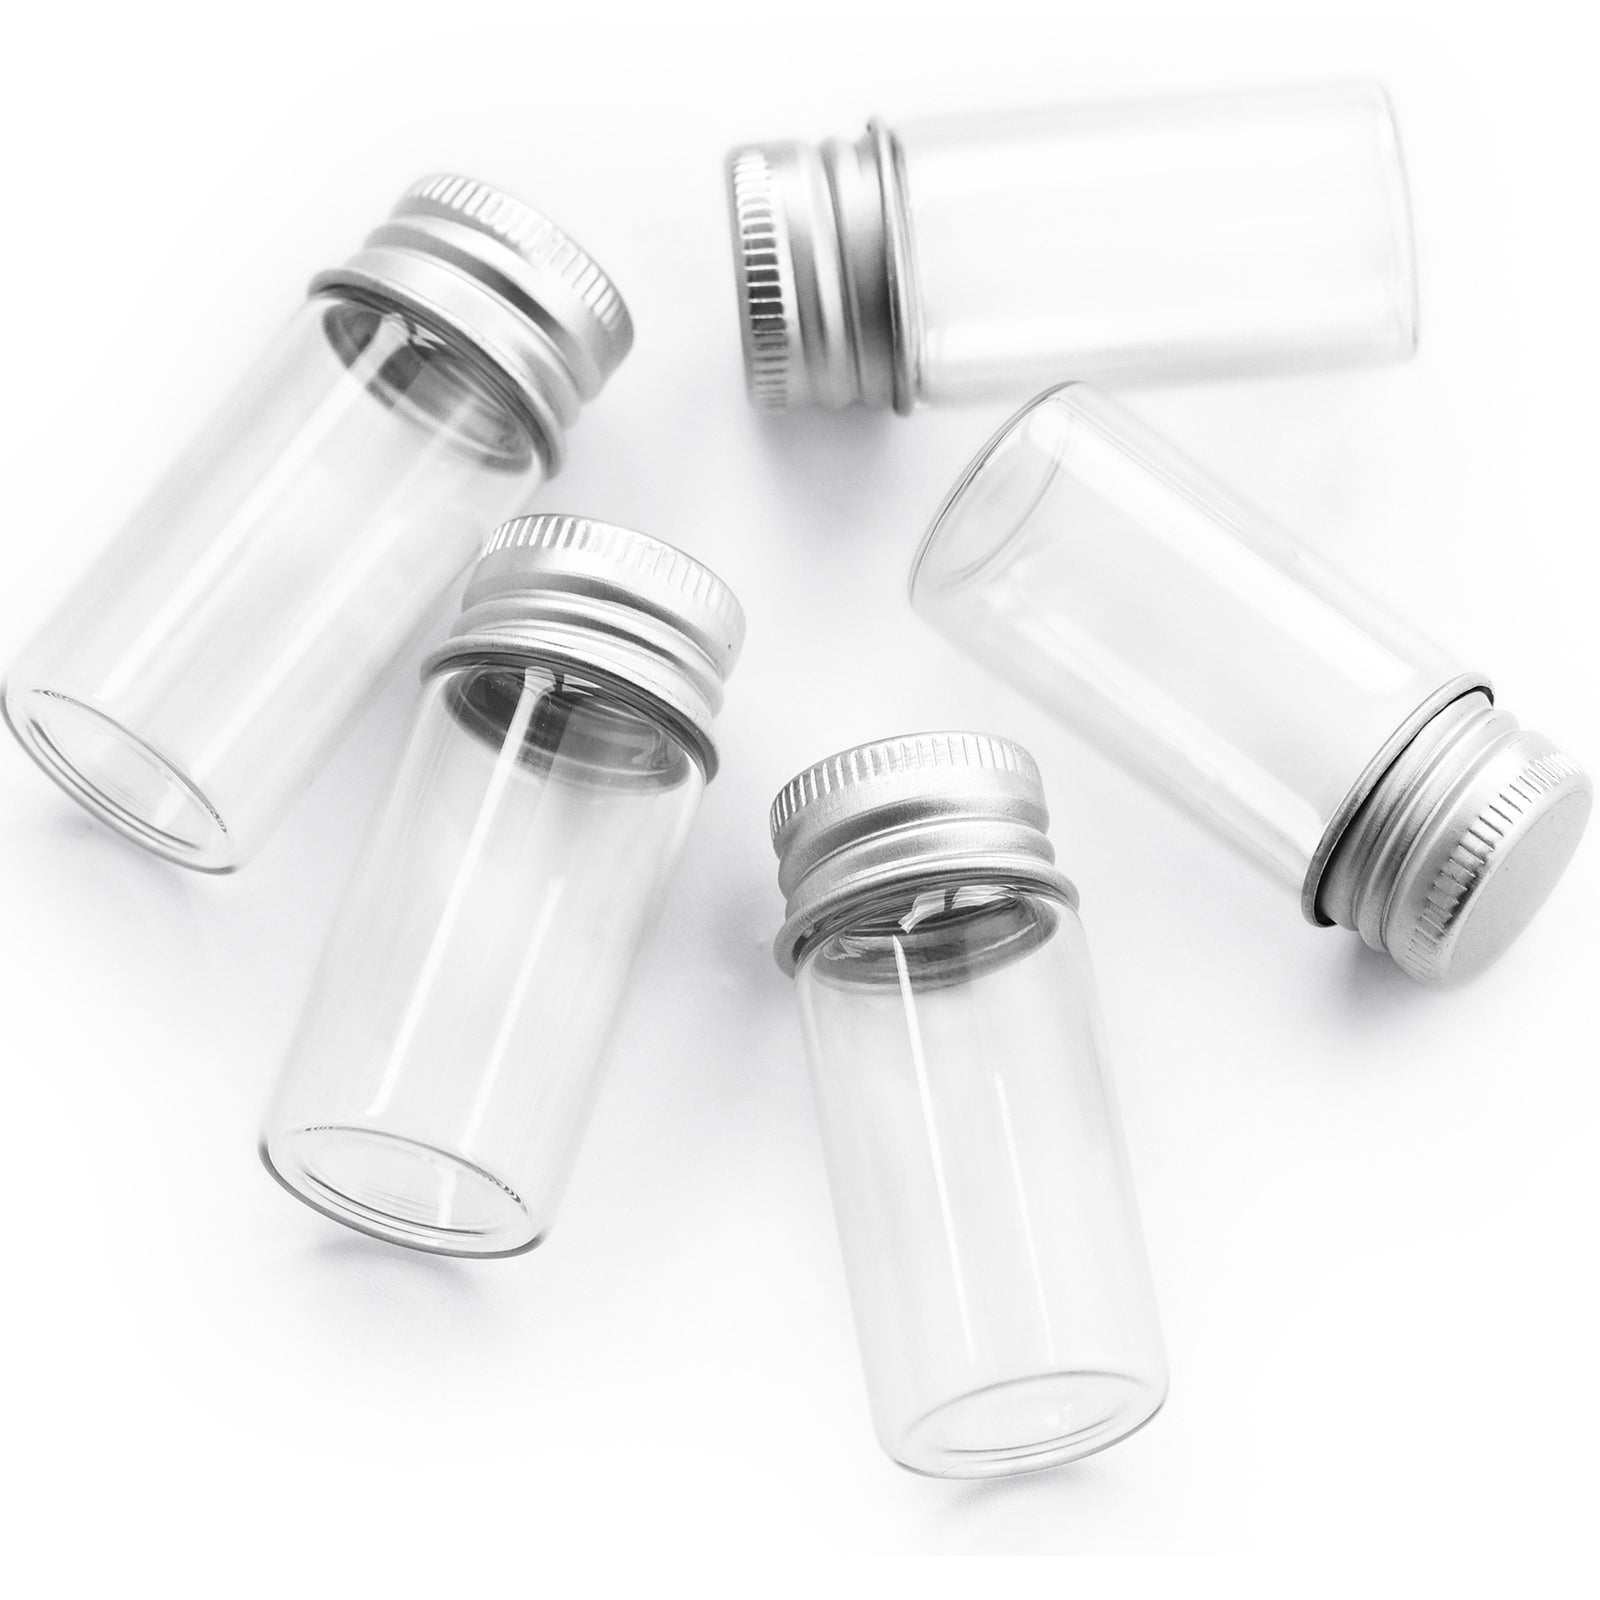 20PCS Tiny Glass Jars Glass Sample Jars Small Glass Jars Small Glass Vials